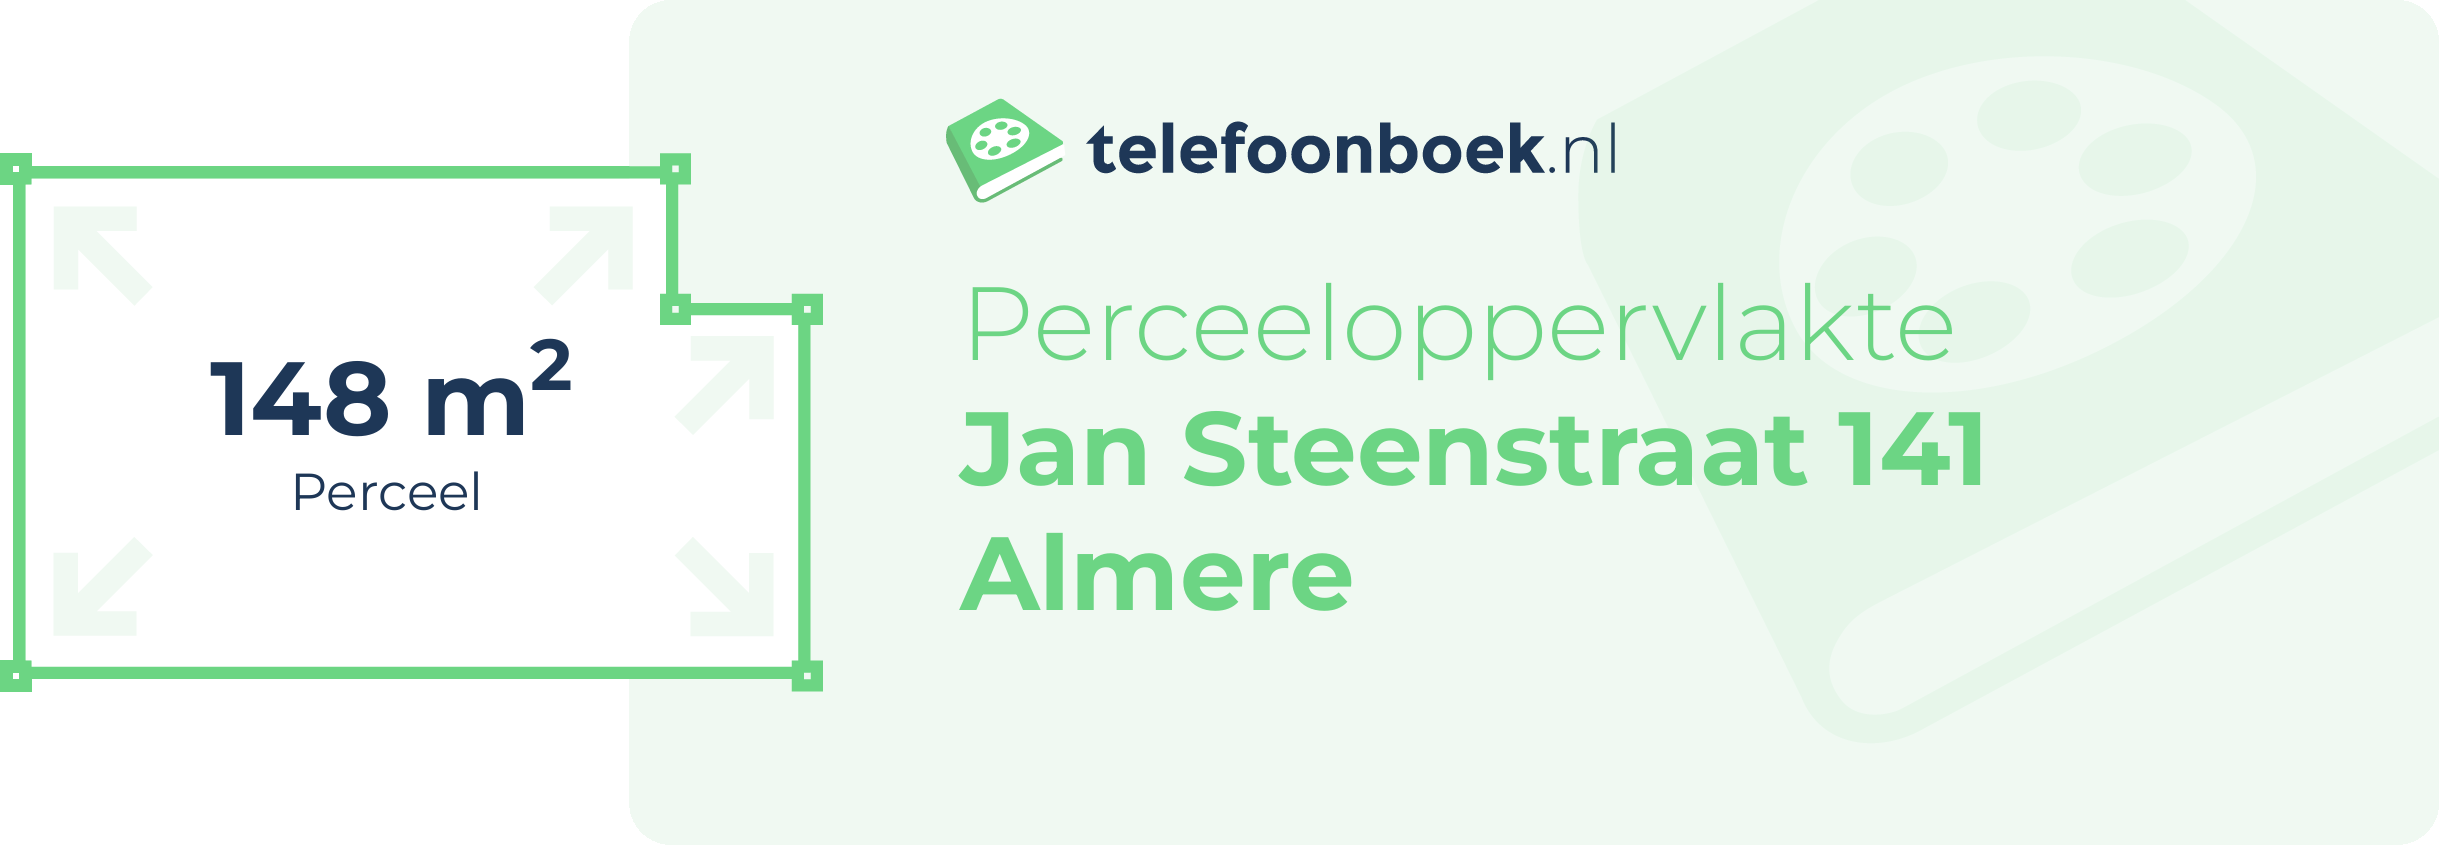 Perceeloppervlakte Jan Steenstraat 141 Almere